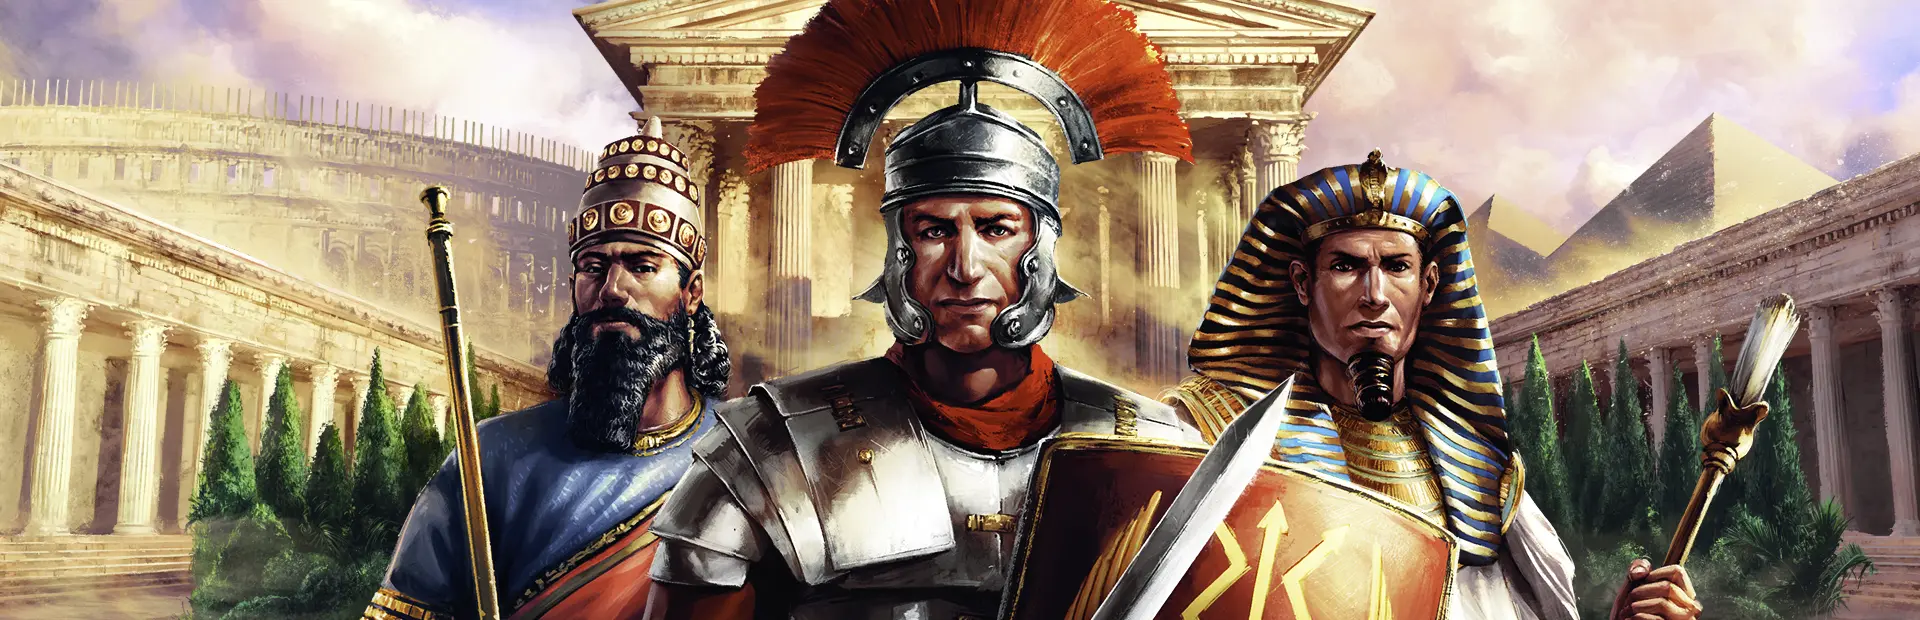 Roman Empire Wars on Steam